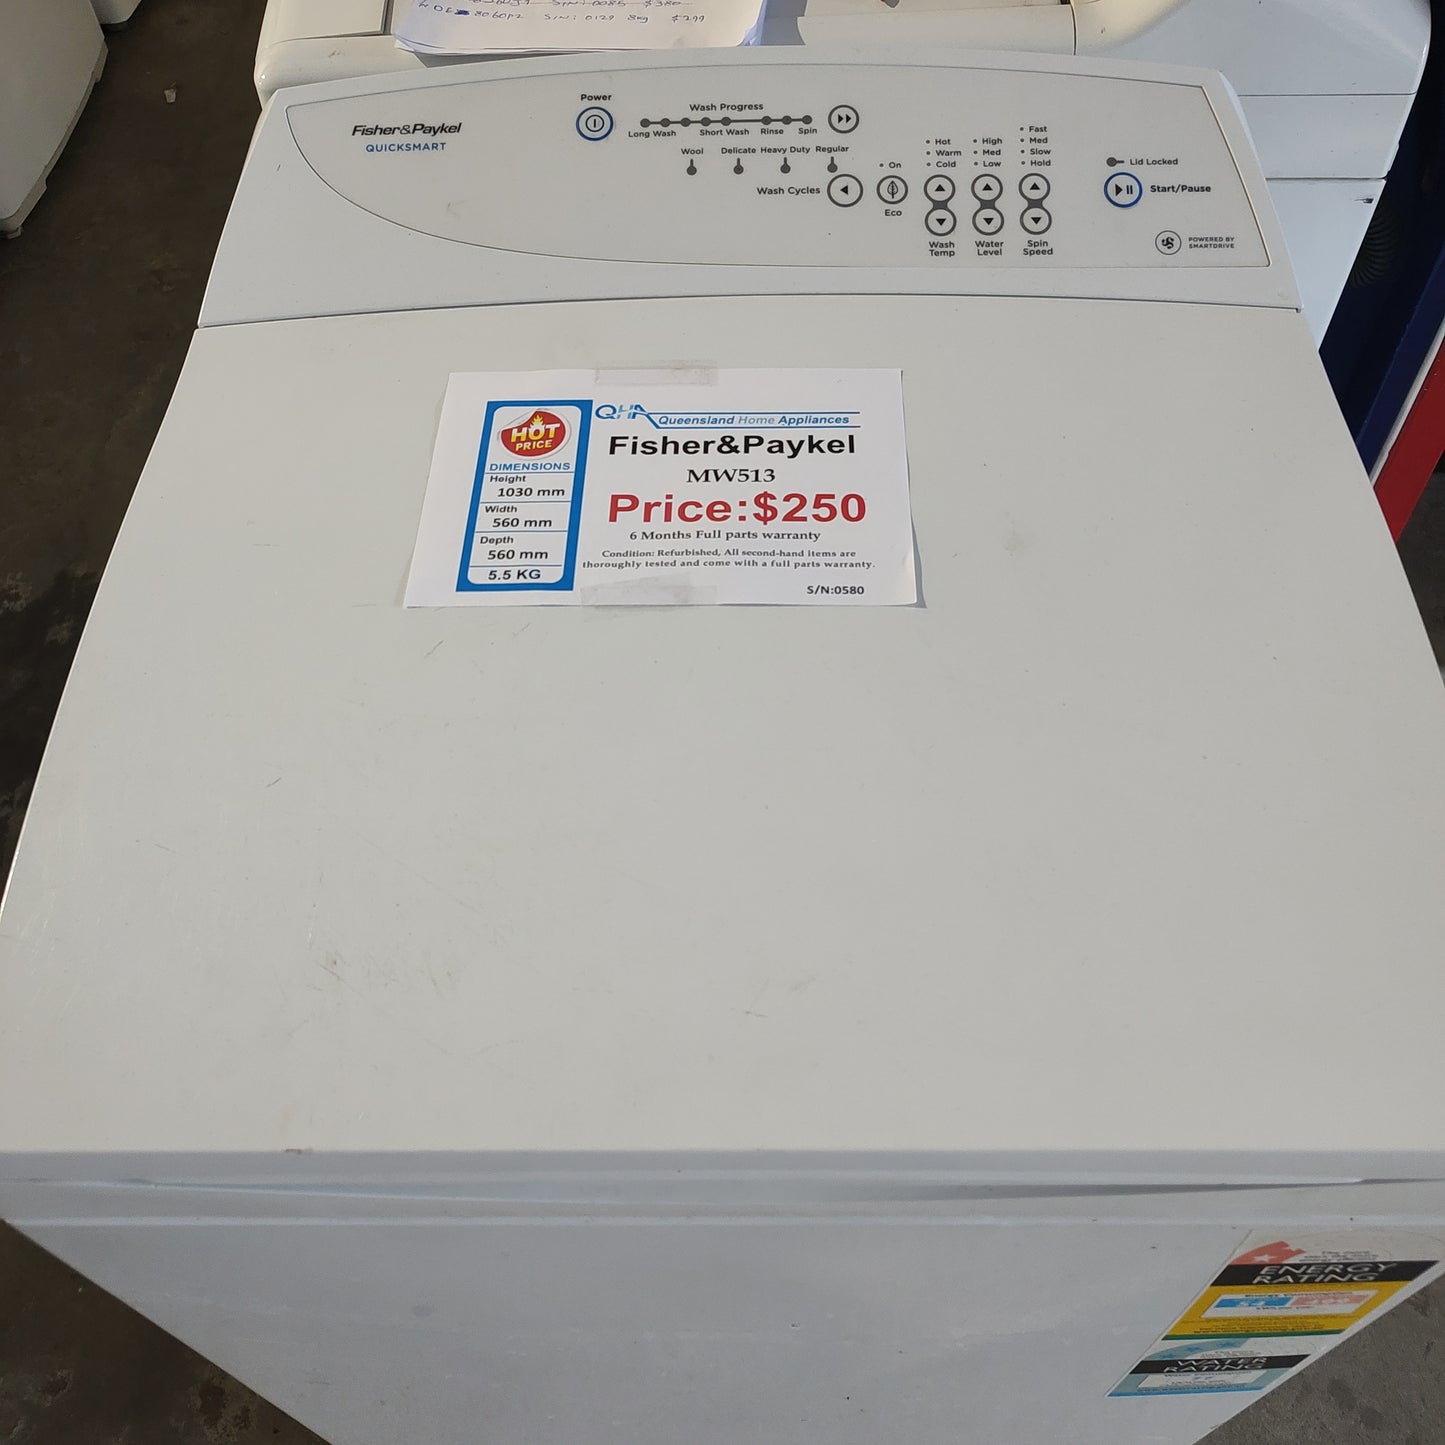 Fisher & Paykel QuickSmart 5.5kg Top Load Washing Machine MW513